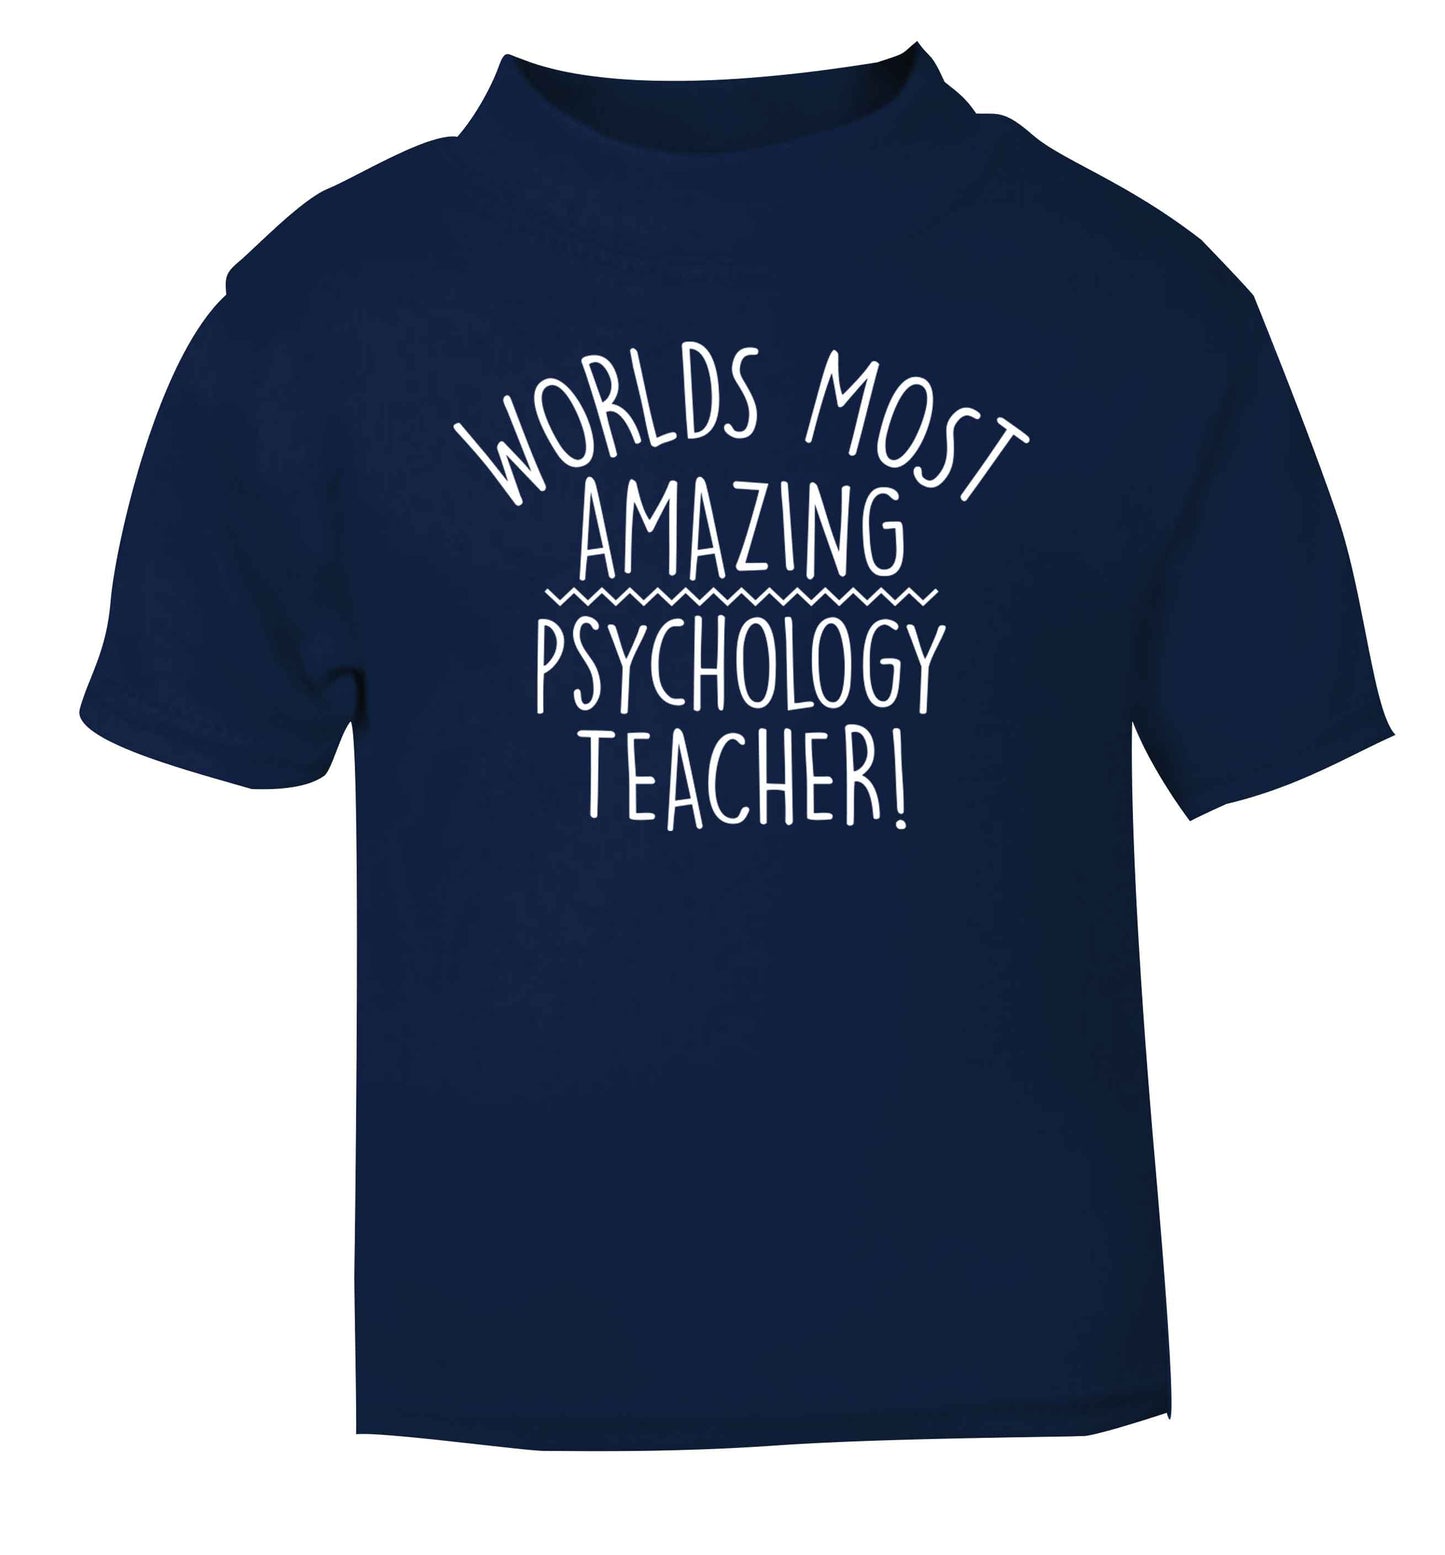 Worlds most amazing psychology teacher navy baby toddler Tshirt 2 Years